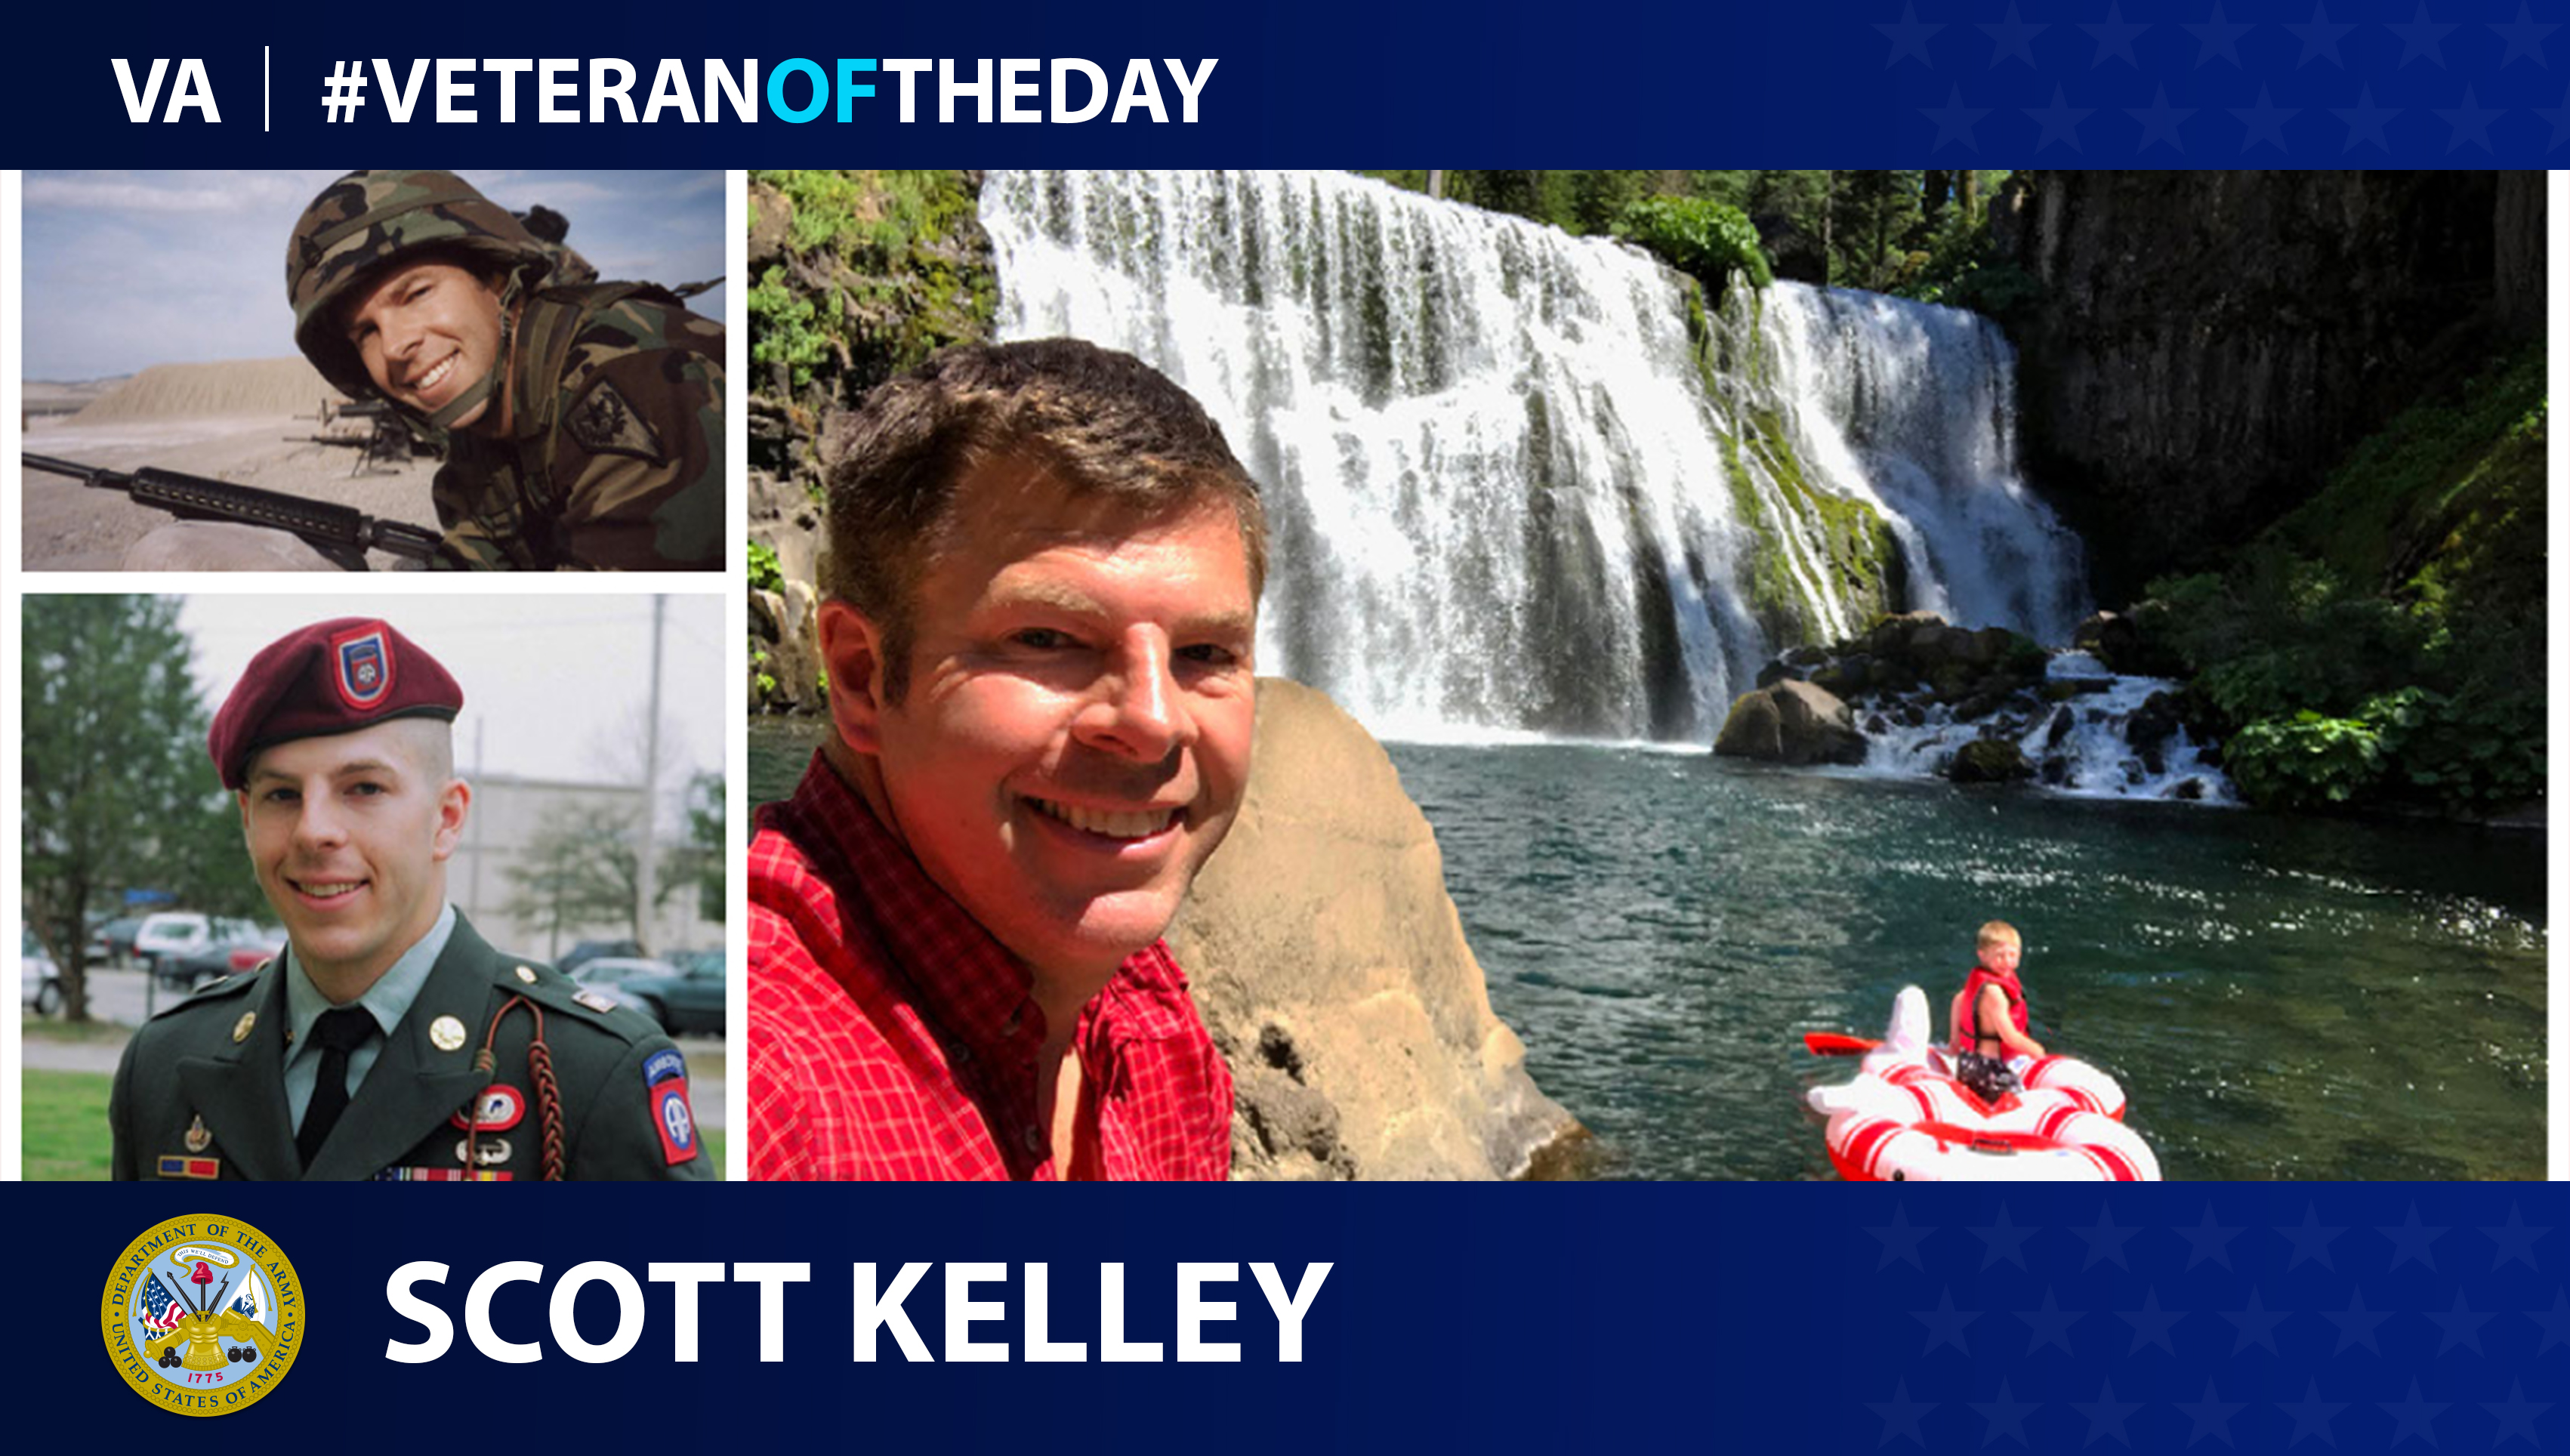 Army Veteran Scott Kelley is today's Veteran of the day.